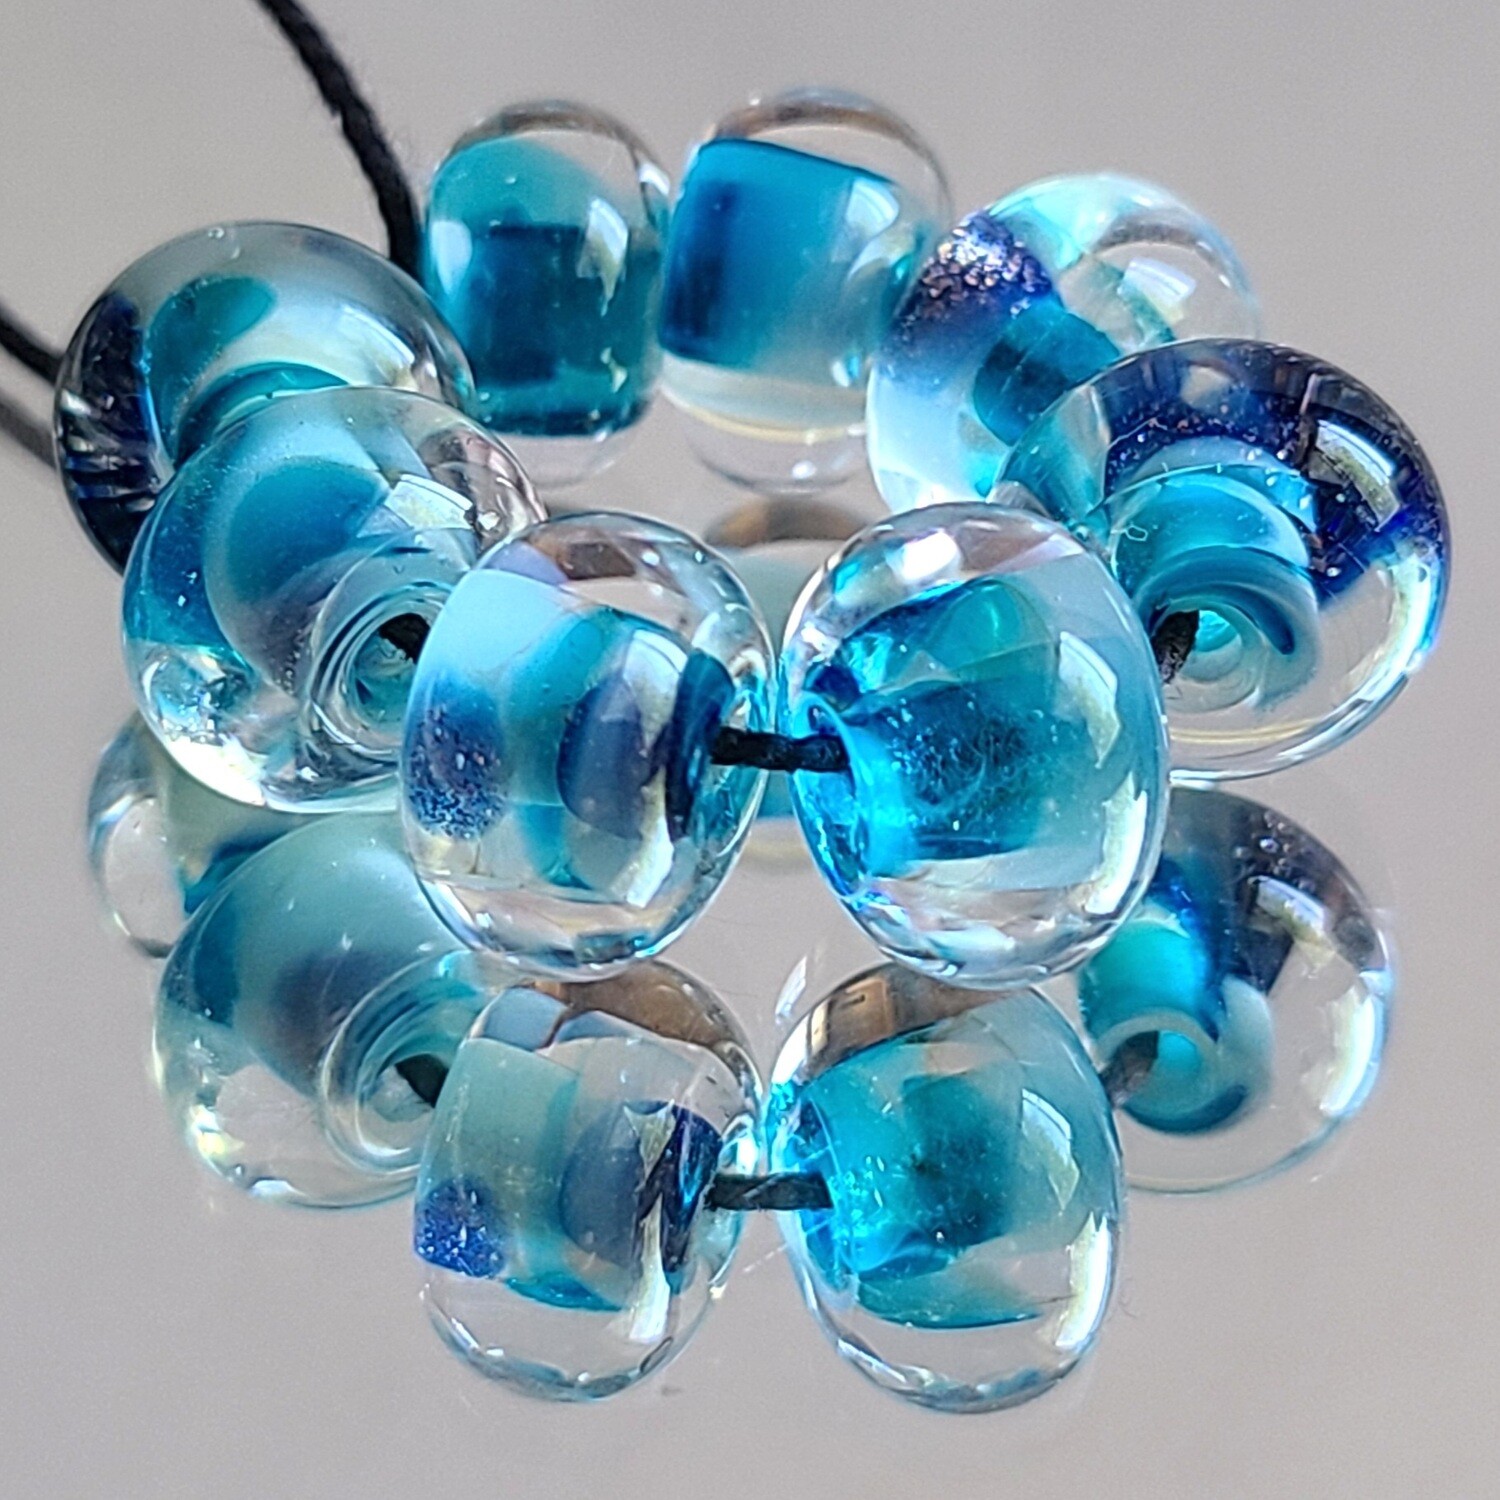 Tranquil Waters Handmade Lampwork Beads